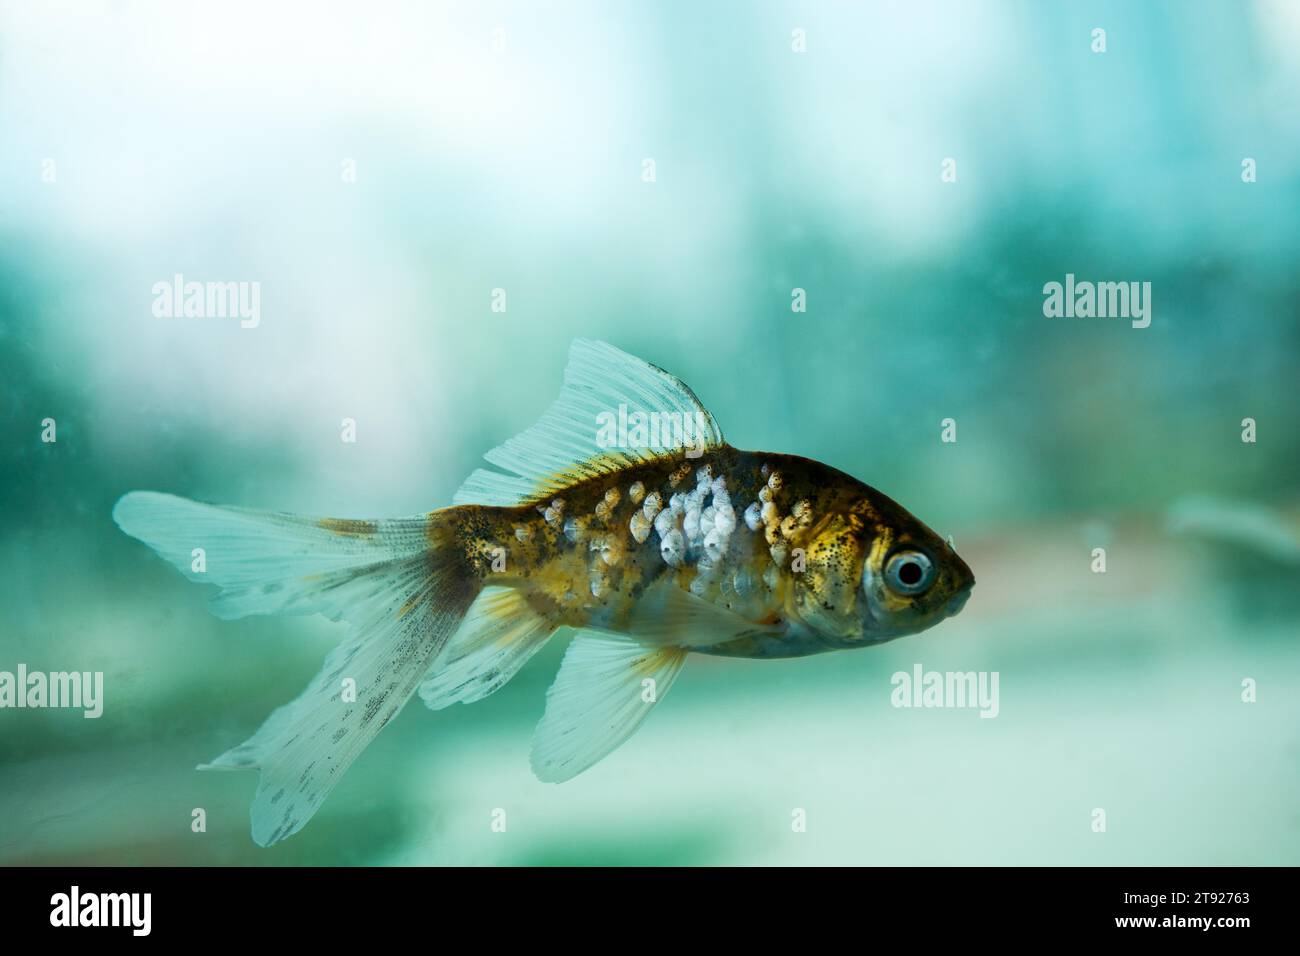 Colorful fish swimming in an aquarium Stock Photo